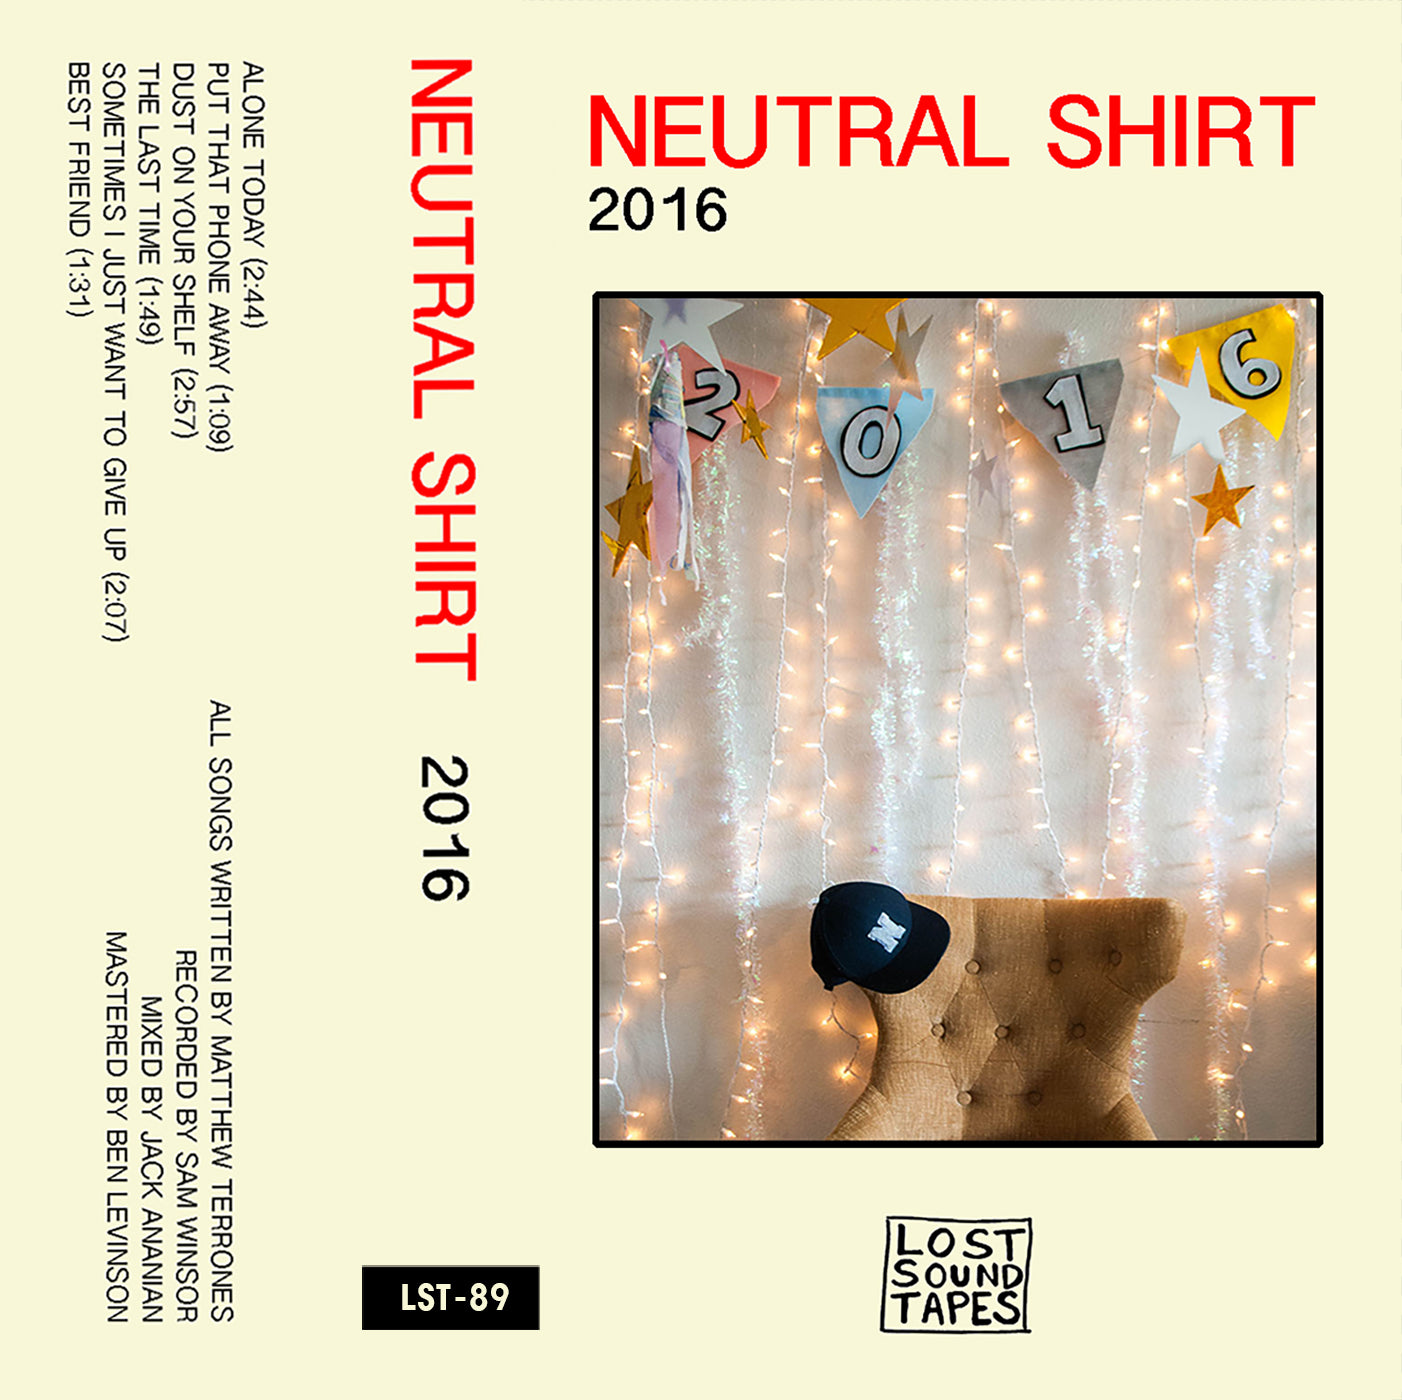 NEUTRAL SHIRT "2016" cassette tape